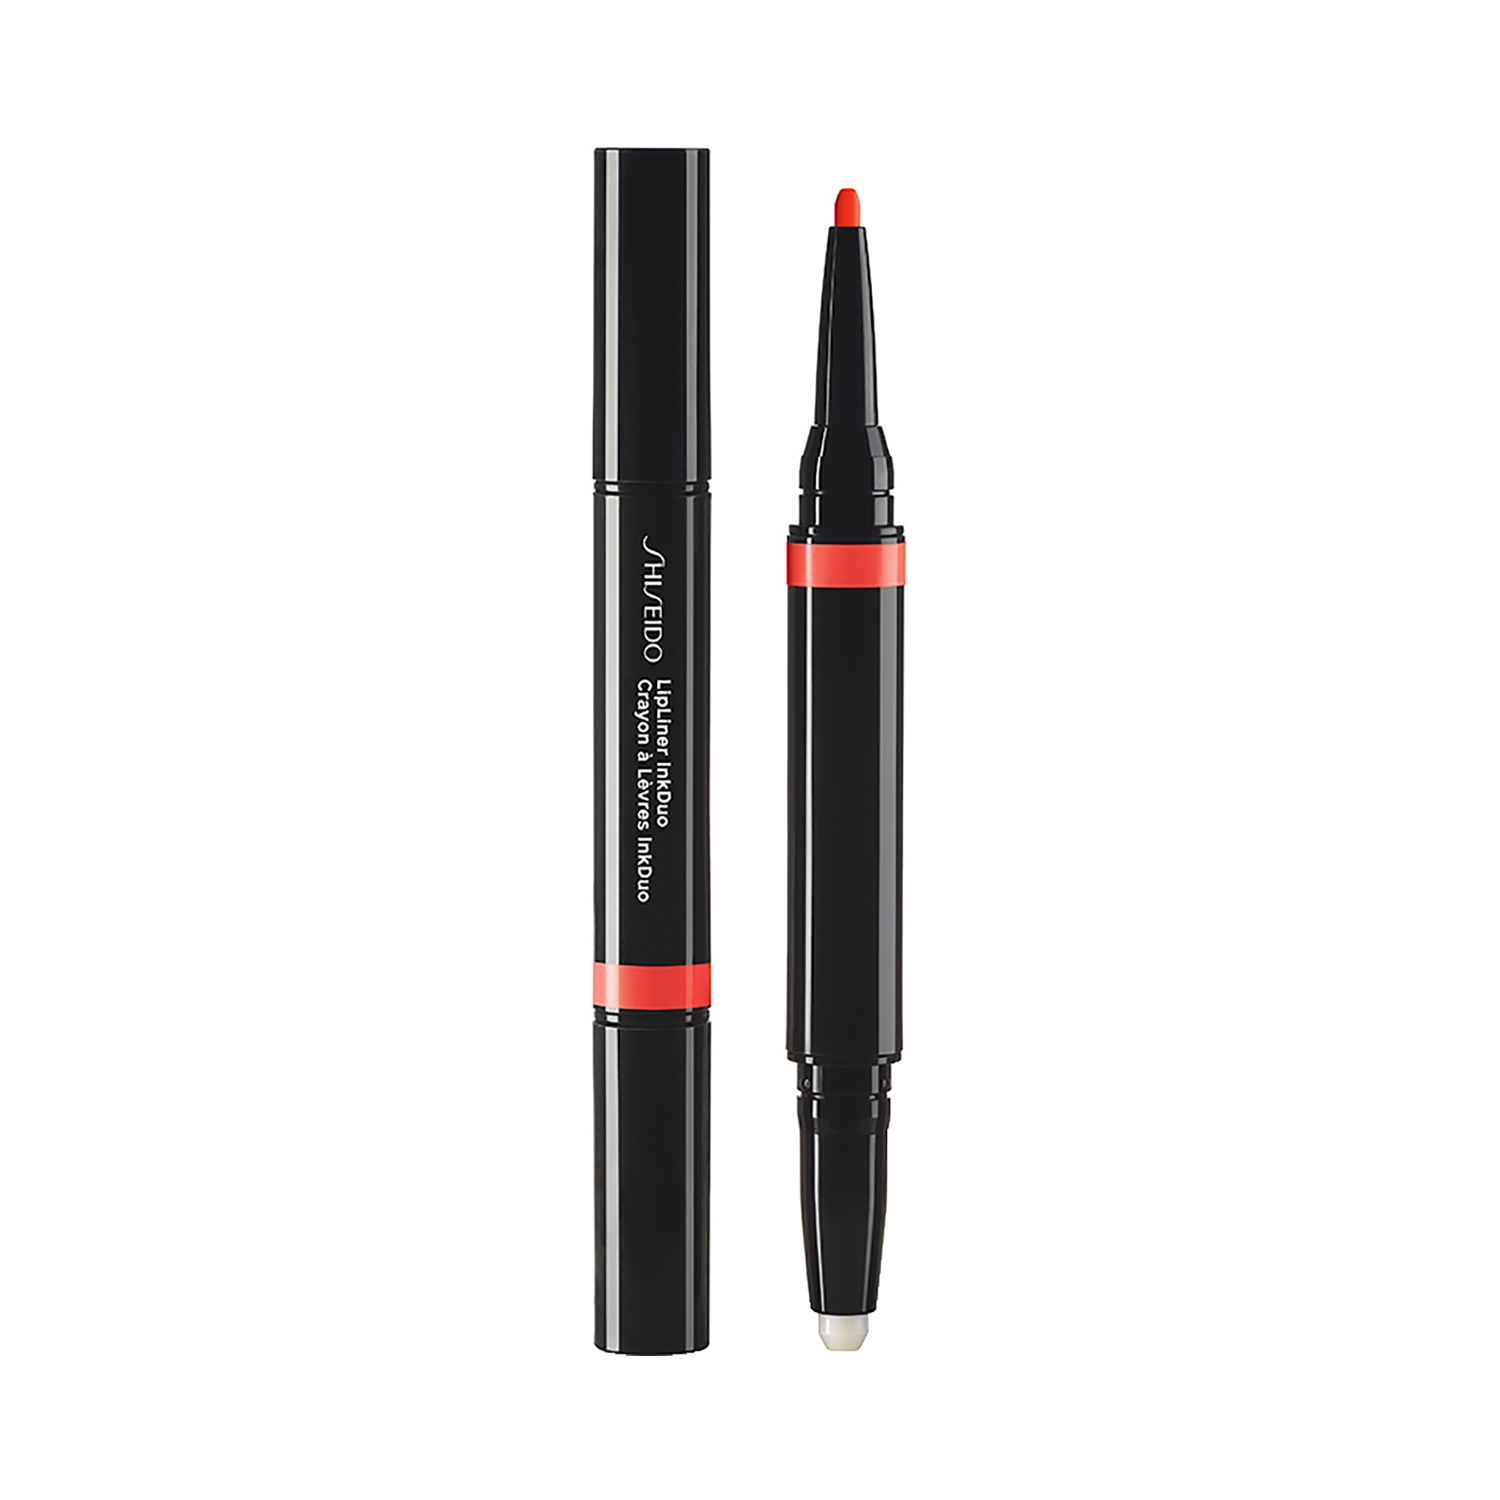 Shiseido | Shiseido Inkduo Prime and Line Duo Lipliner - 05 Geranium (1.1g)